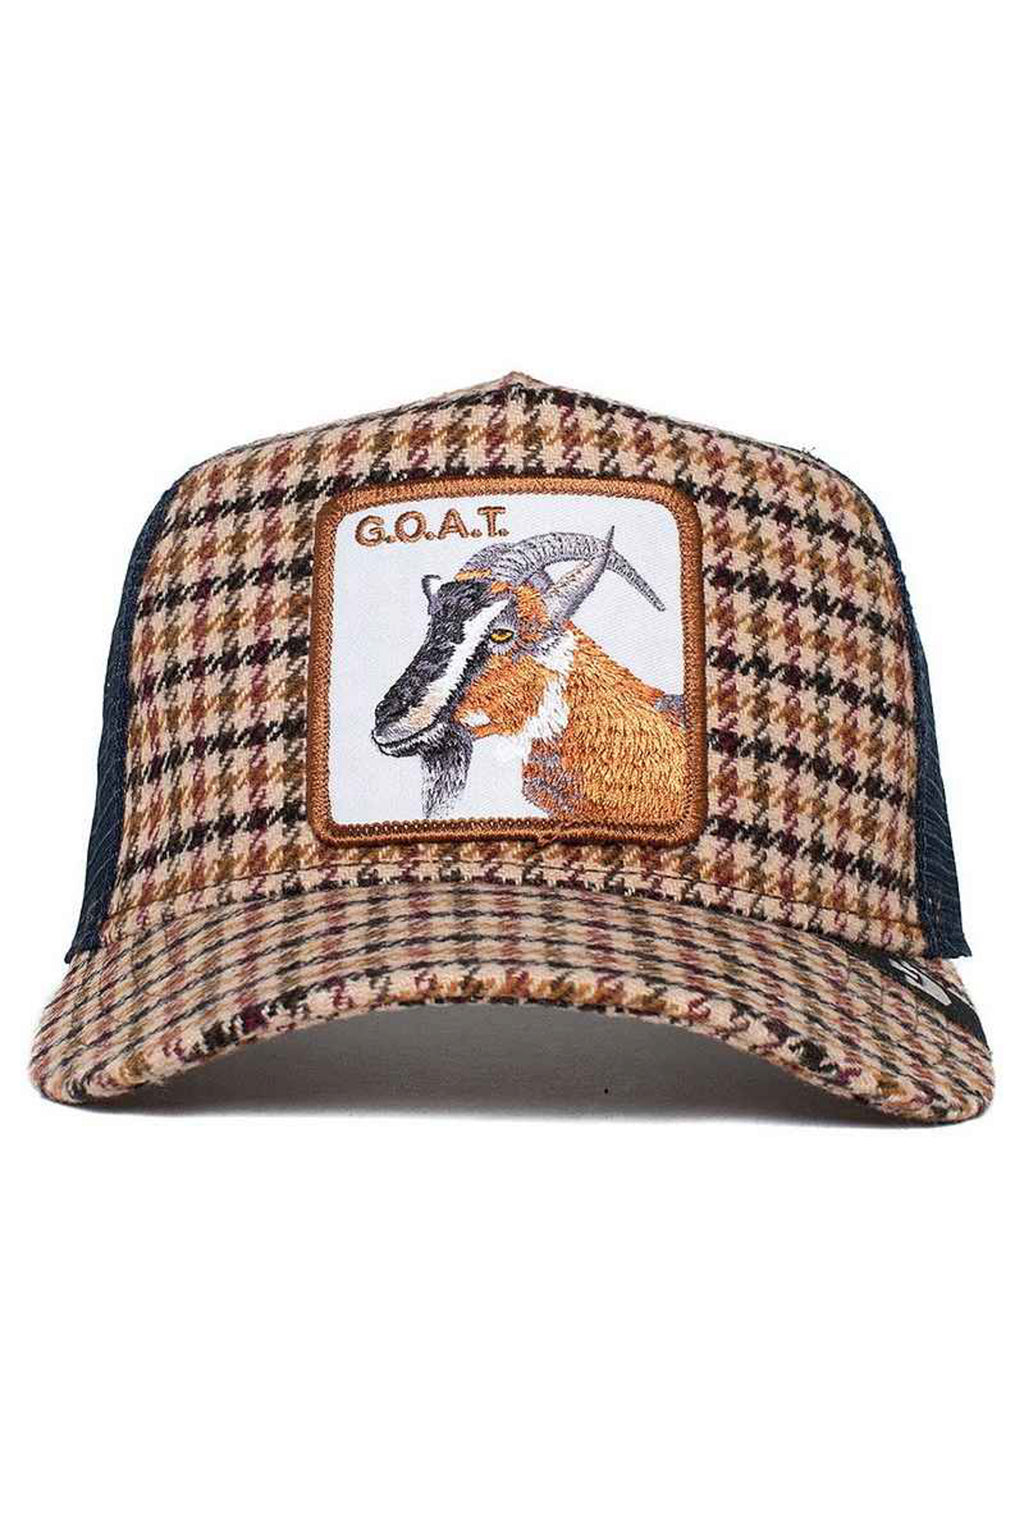 Good Kid Plaad City Trucker Hat